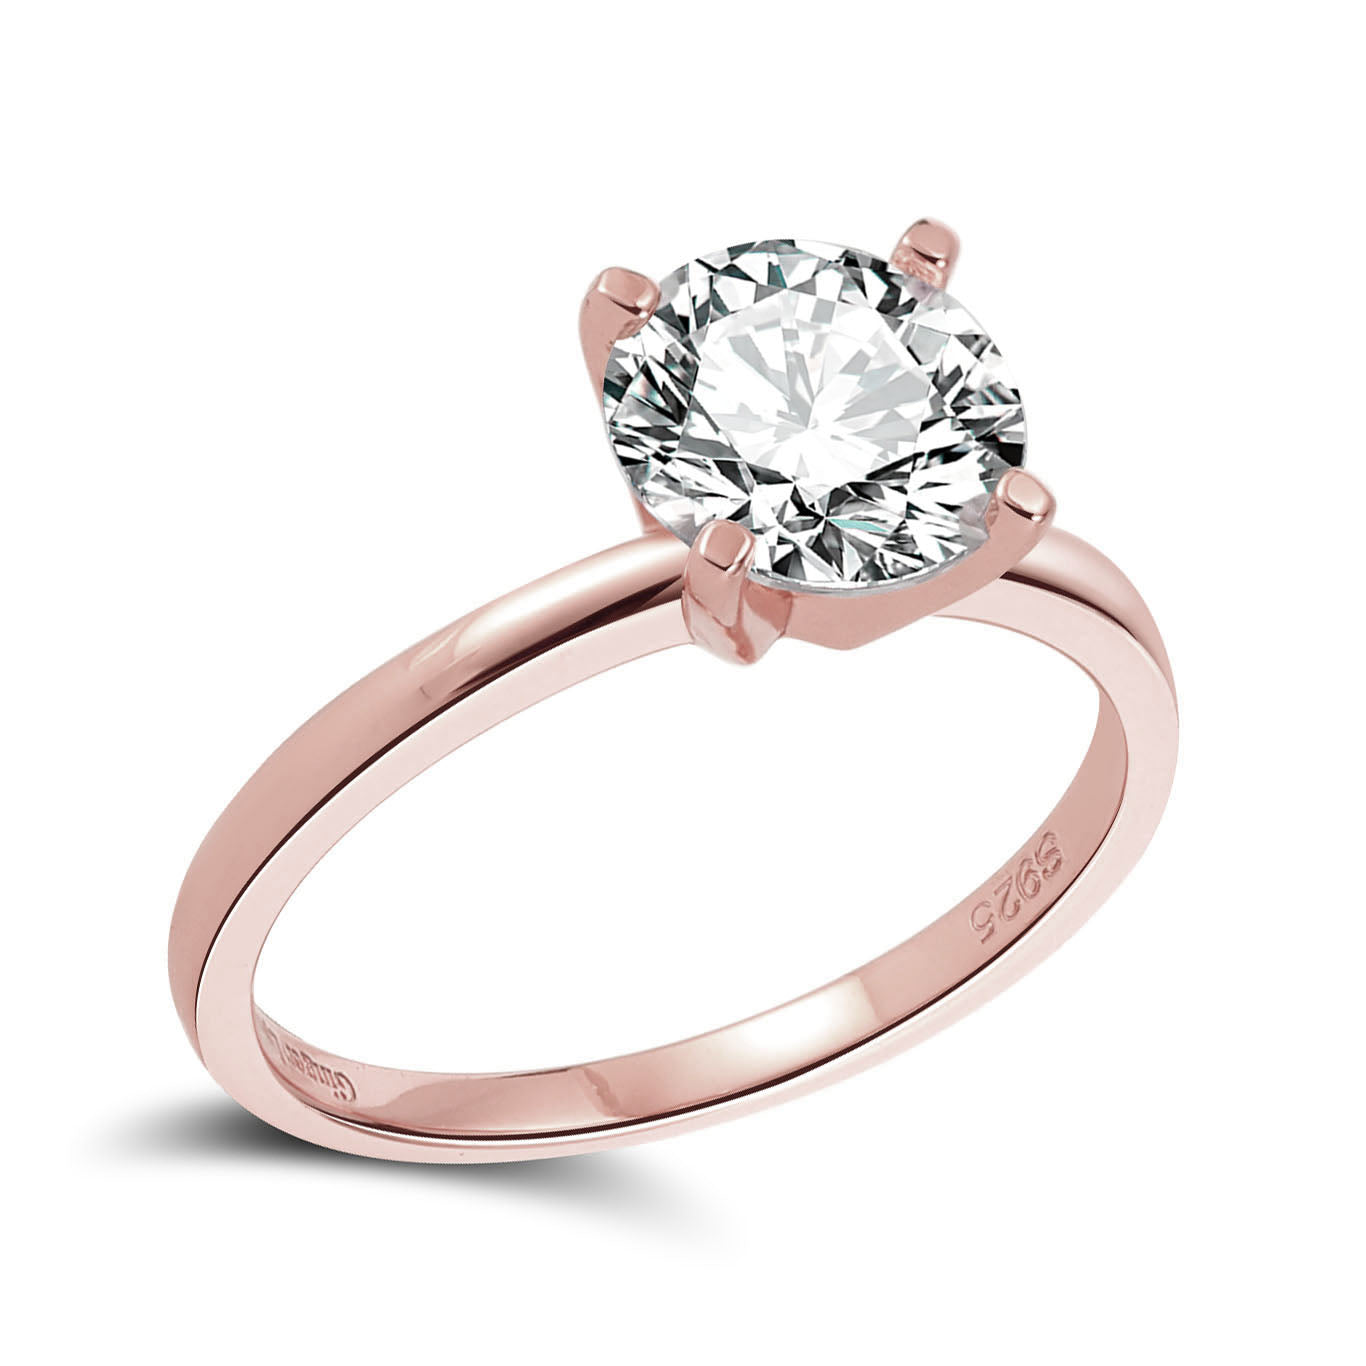 Amore Engagement Ring Women 3Ct Topaz Rose Sterling Silver Ginger Lyne Collection - Rose 3Carat,9